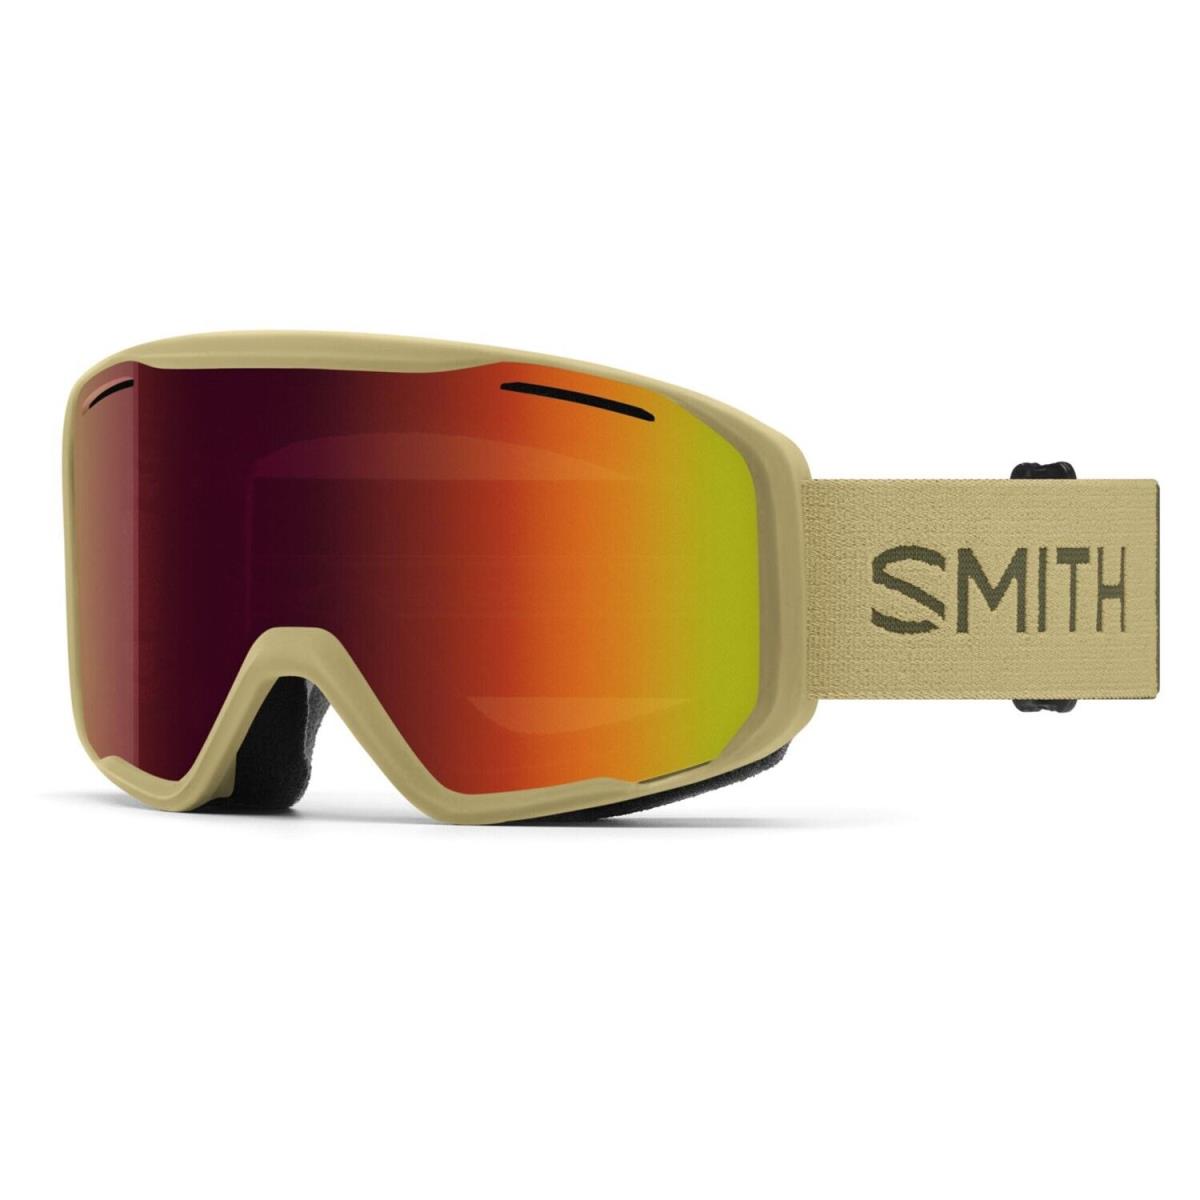 Smith Blazer Ski / Snow Goggles Sandstorm Forest Frame Red Sol-x Mirror Lens